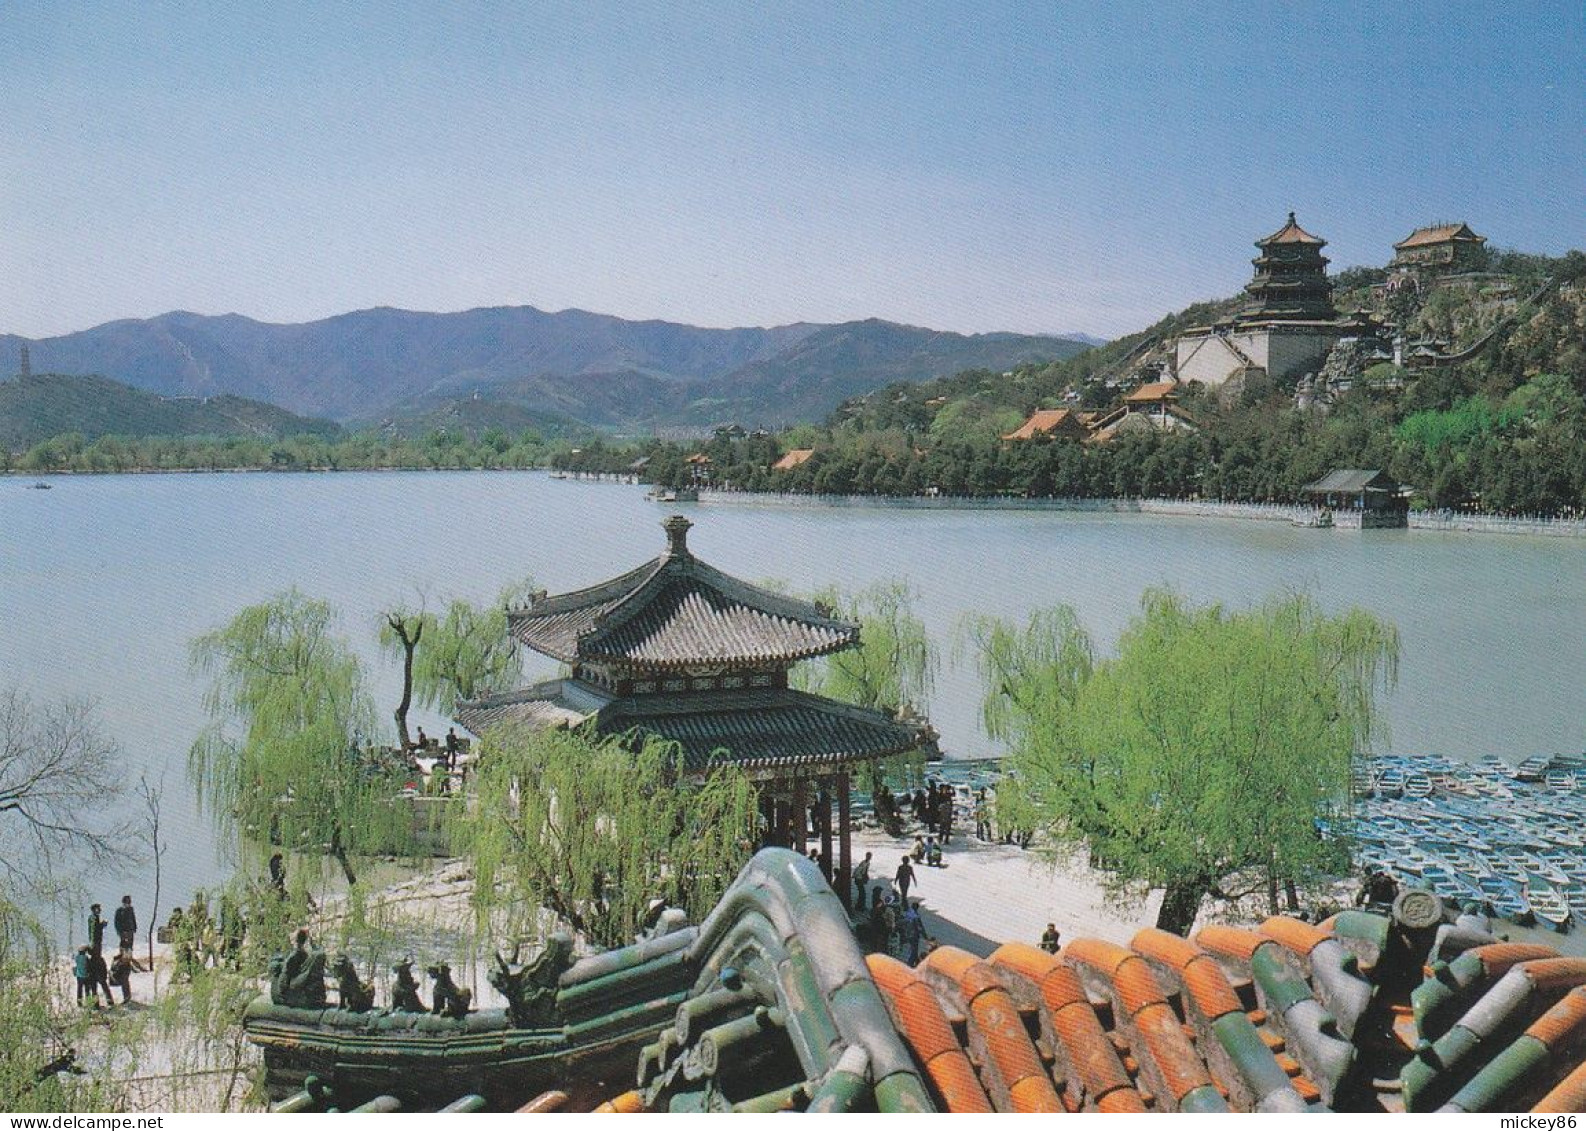 Chine--PEKIN -- Yi He Yuan --The Summer Palace ---Lot de 10 cartes postales dans l'emballage d'origine --